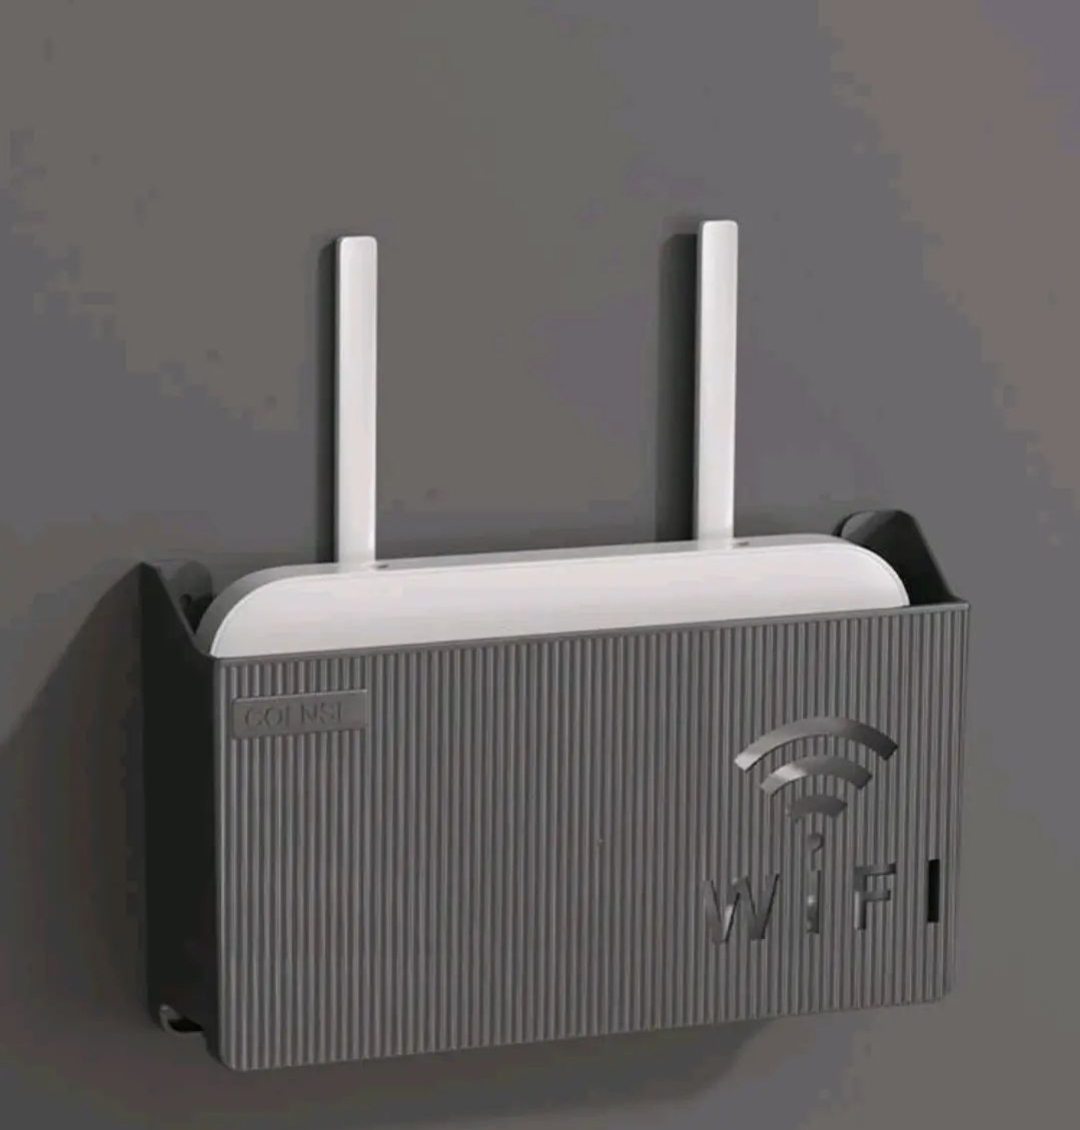 Modem Qutusu / Router Box